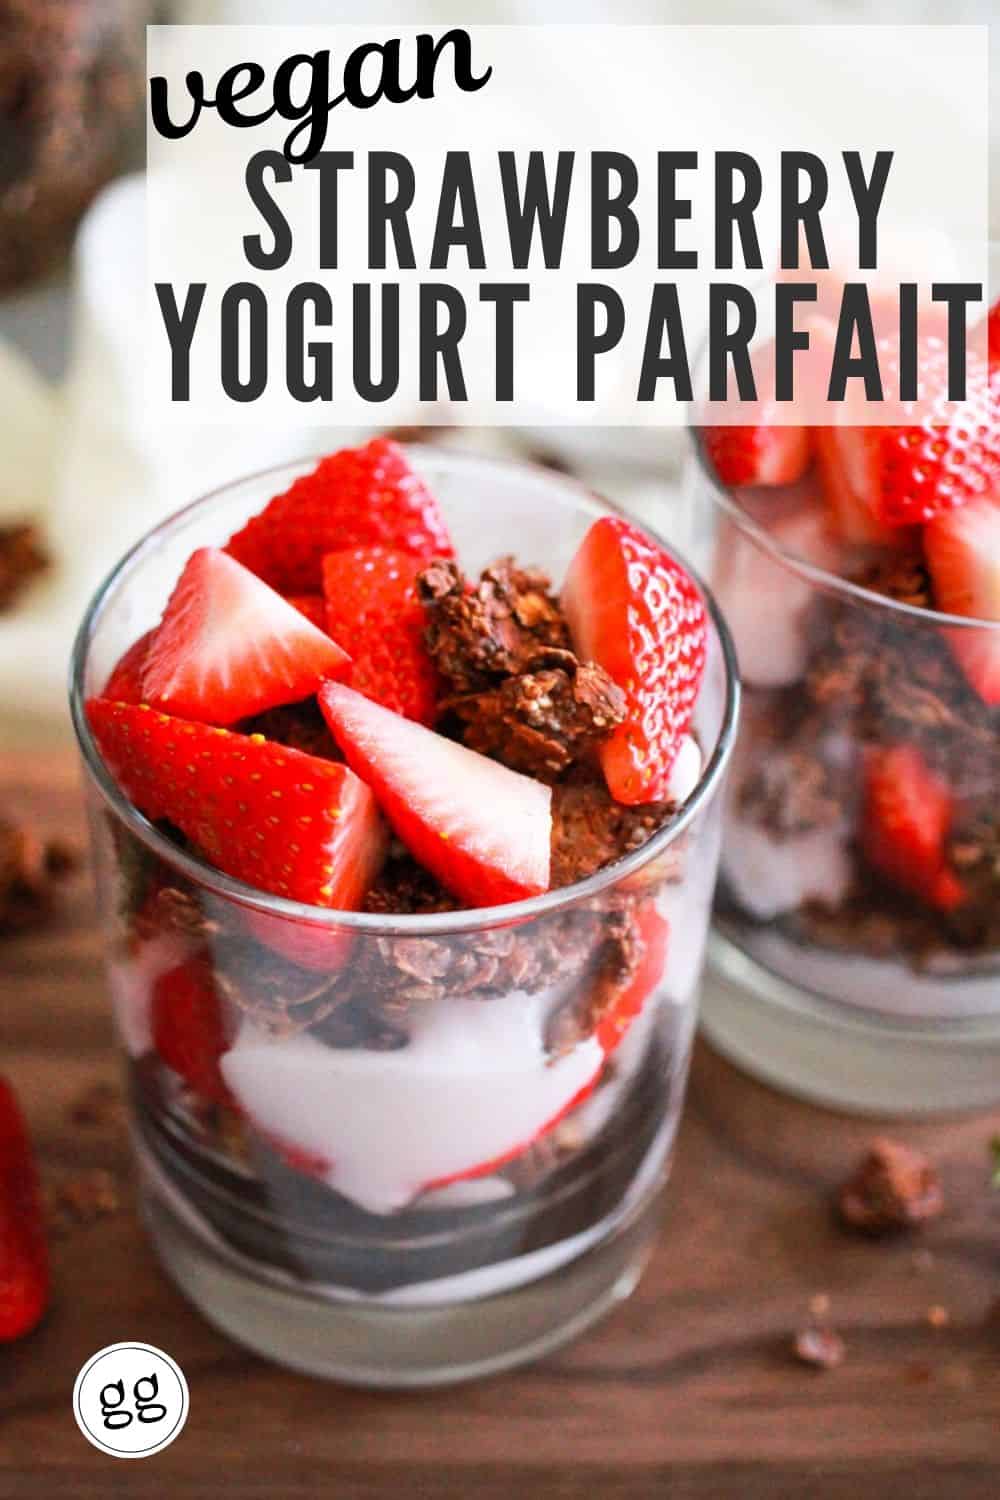 Yogurt parfait in a glass with text that reads, "Vegan Strawberry Yogurt Parfait."